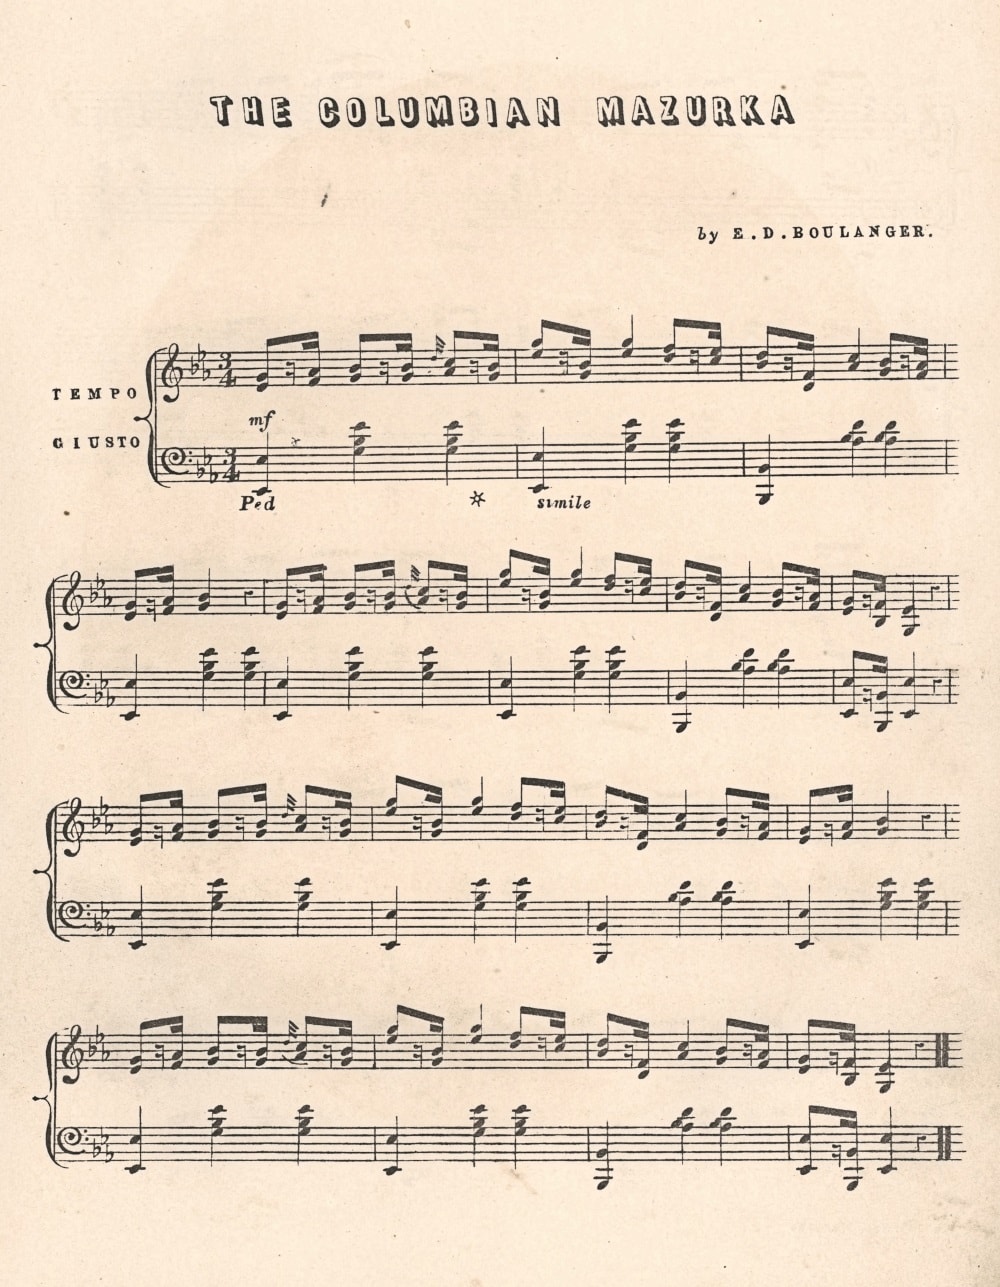 The Columbian mazurka, by Boulanger (Sydney: Clarke, 1857)